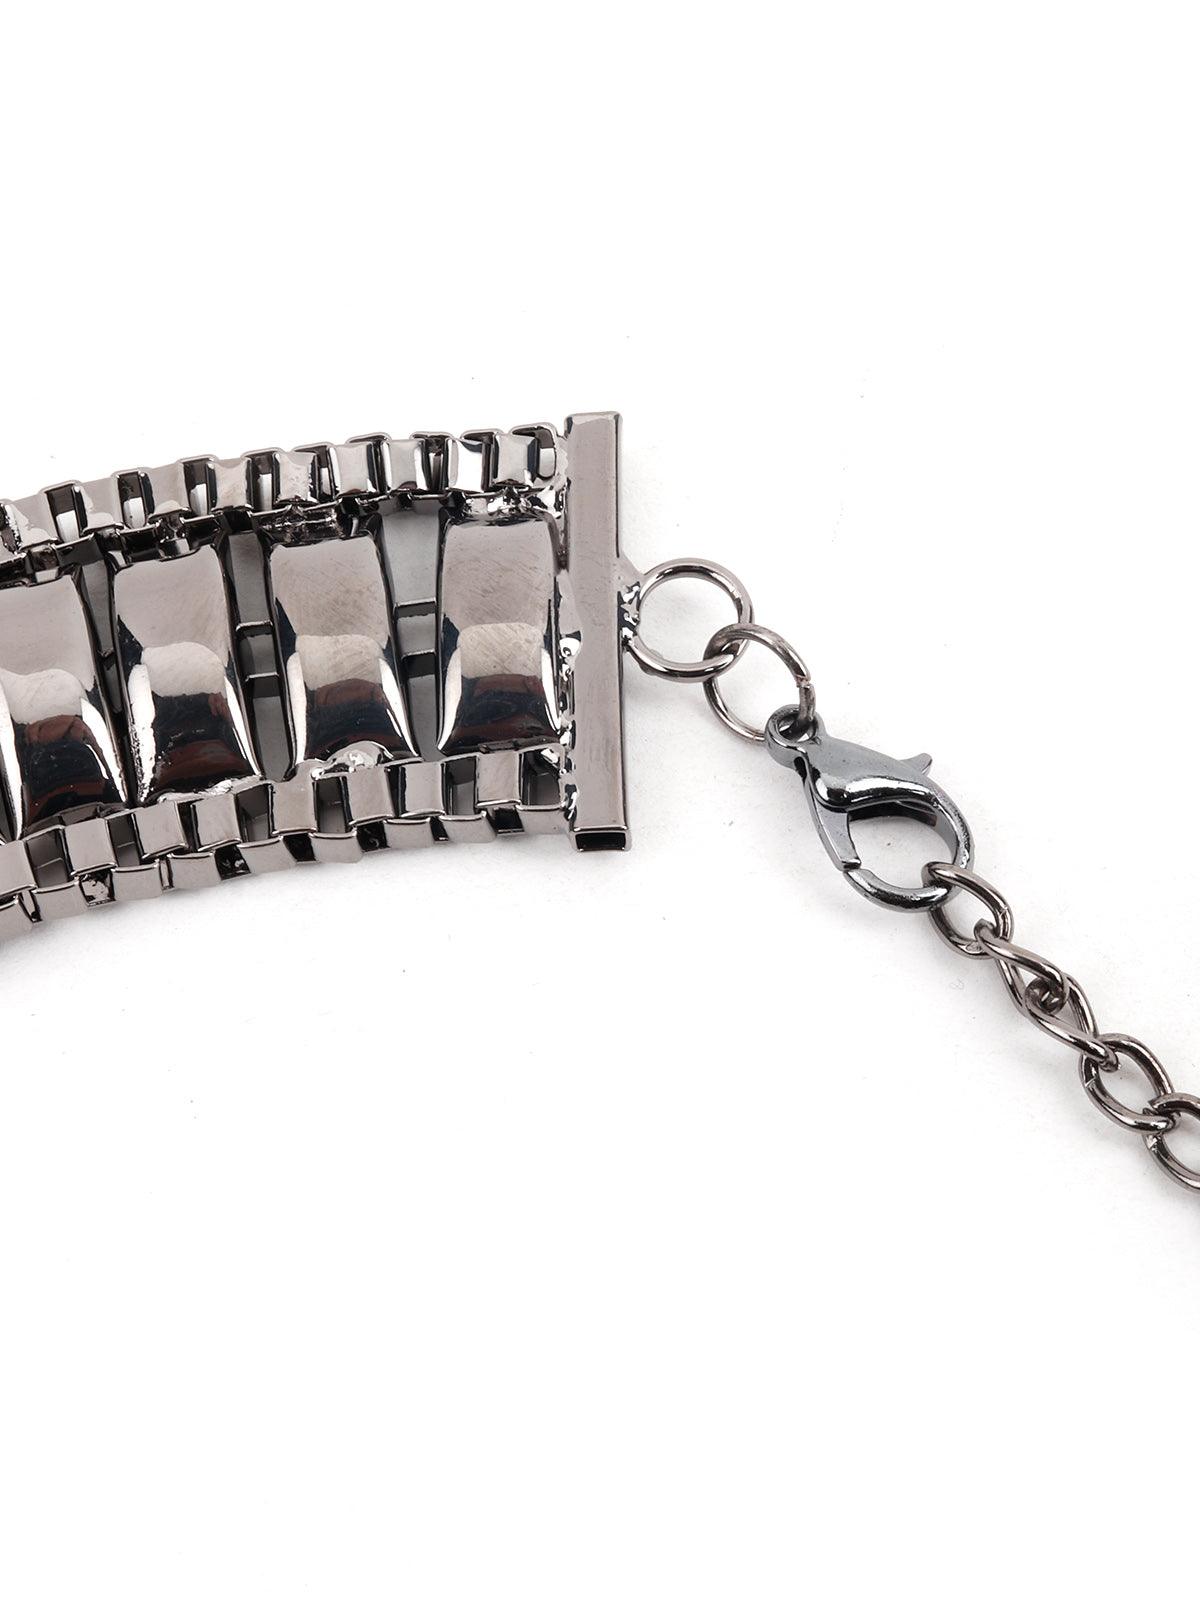 Chunky gunmetal metallic fringe necklace - Odette